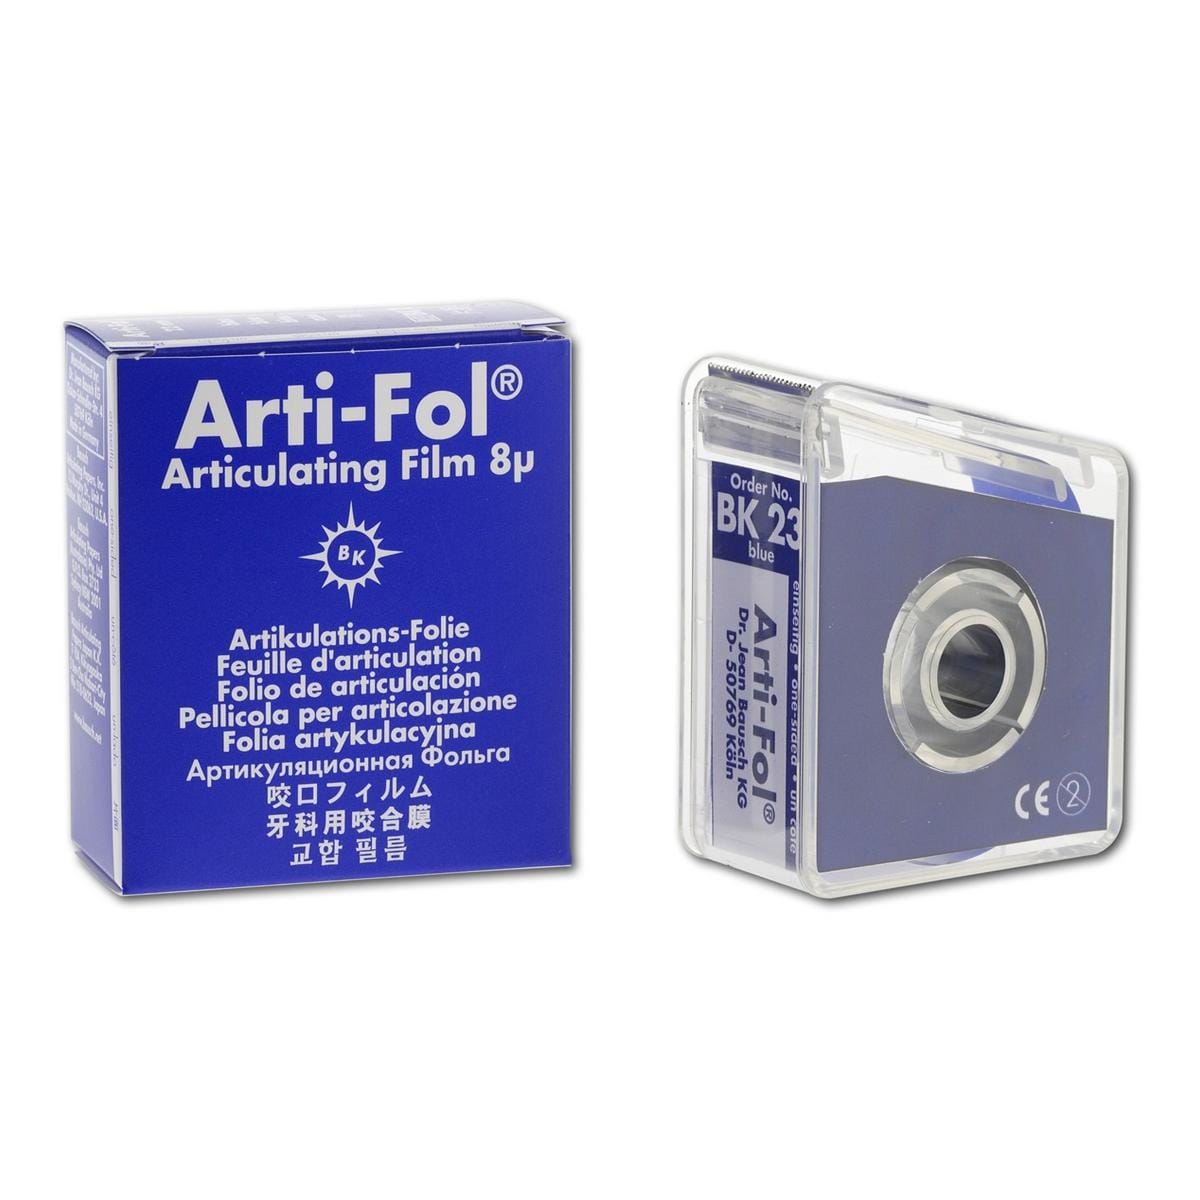 Arti-Fol enkelzijdig, 8 micron - BK23, blauw in dispenserbox